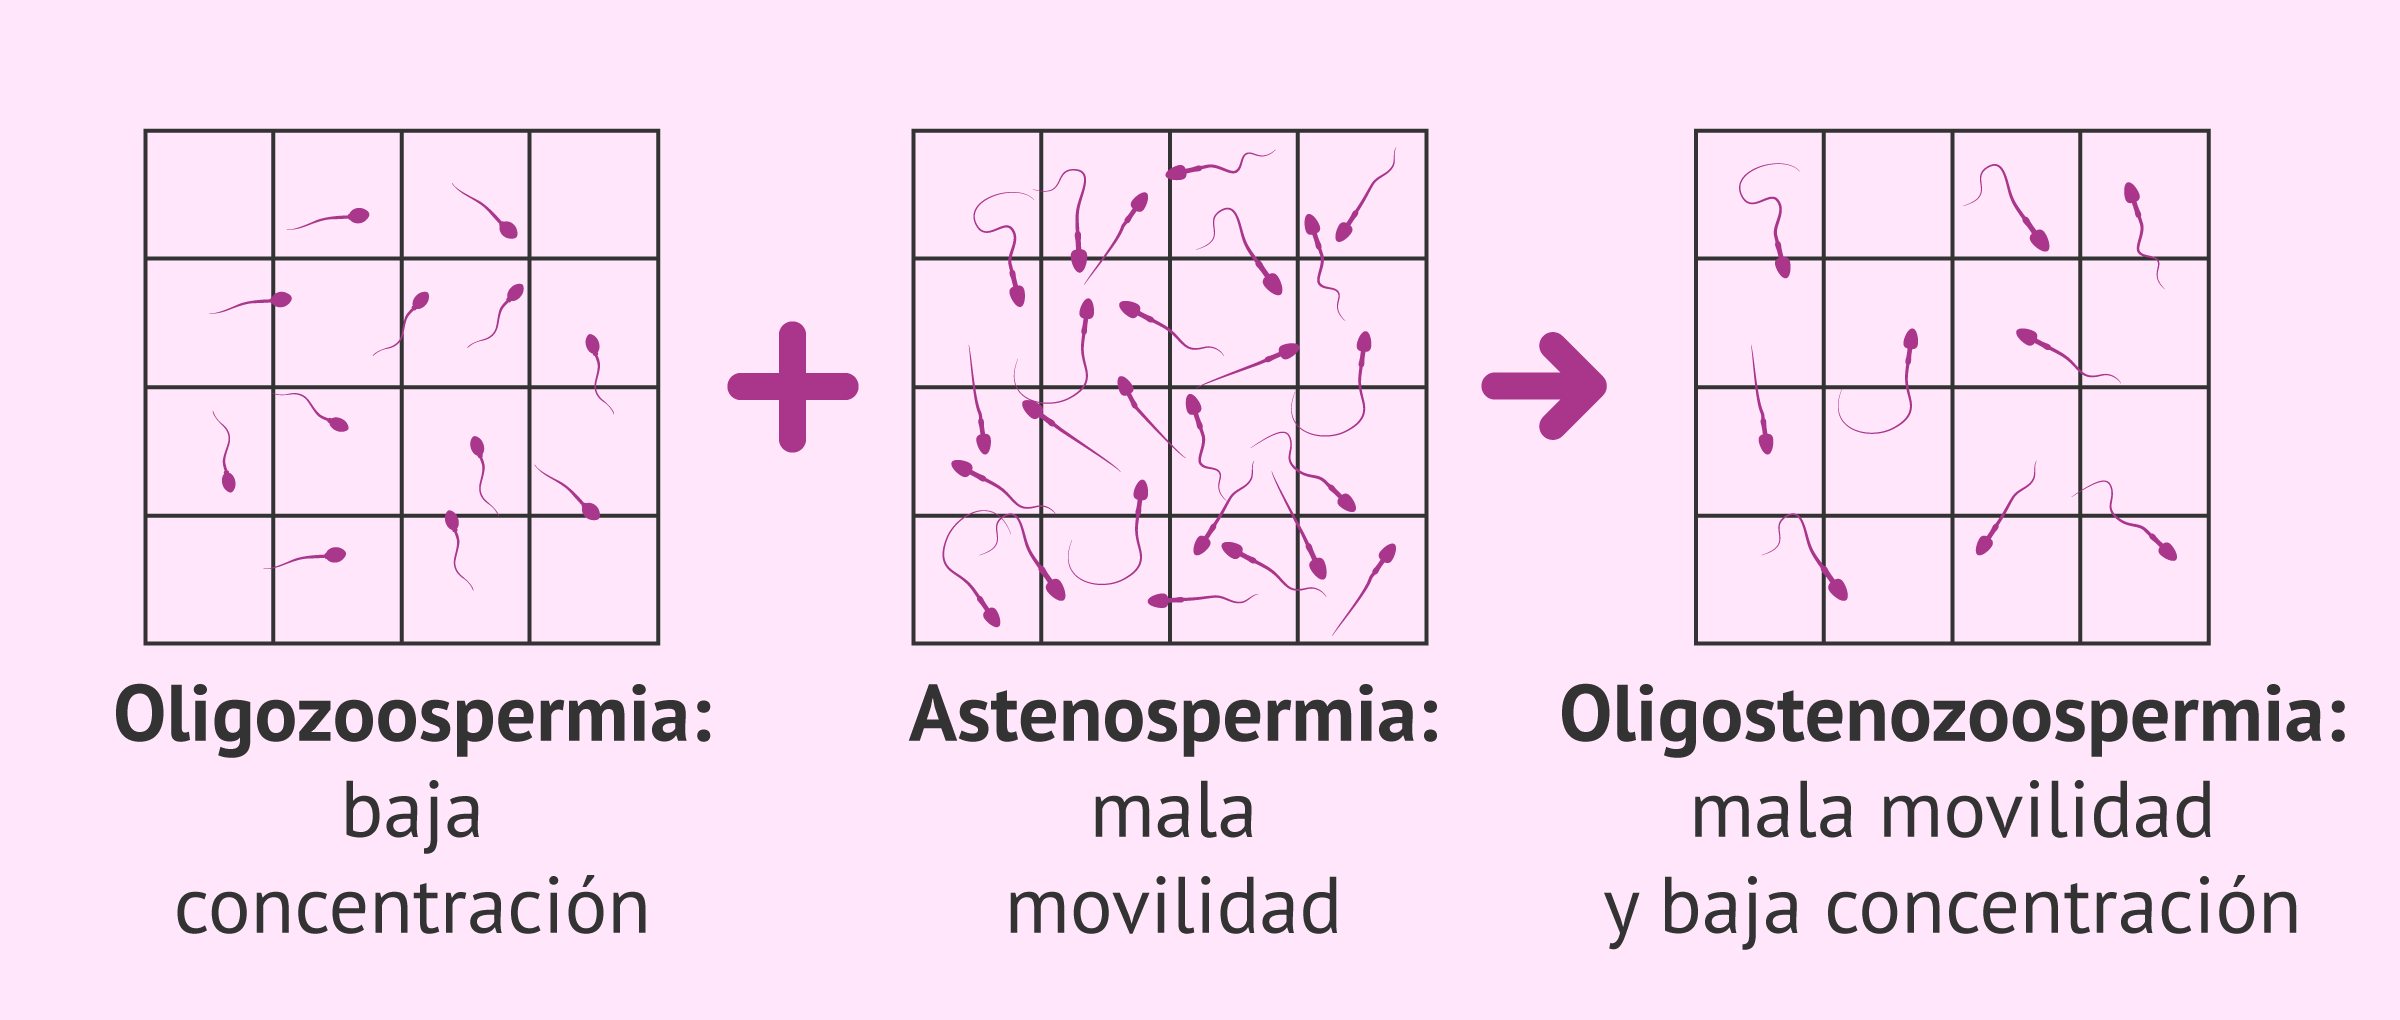 Alteración seminal: oligoatenozoospermia